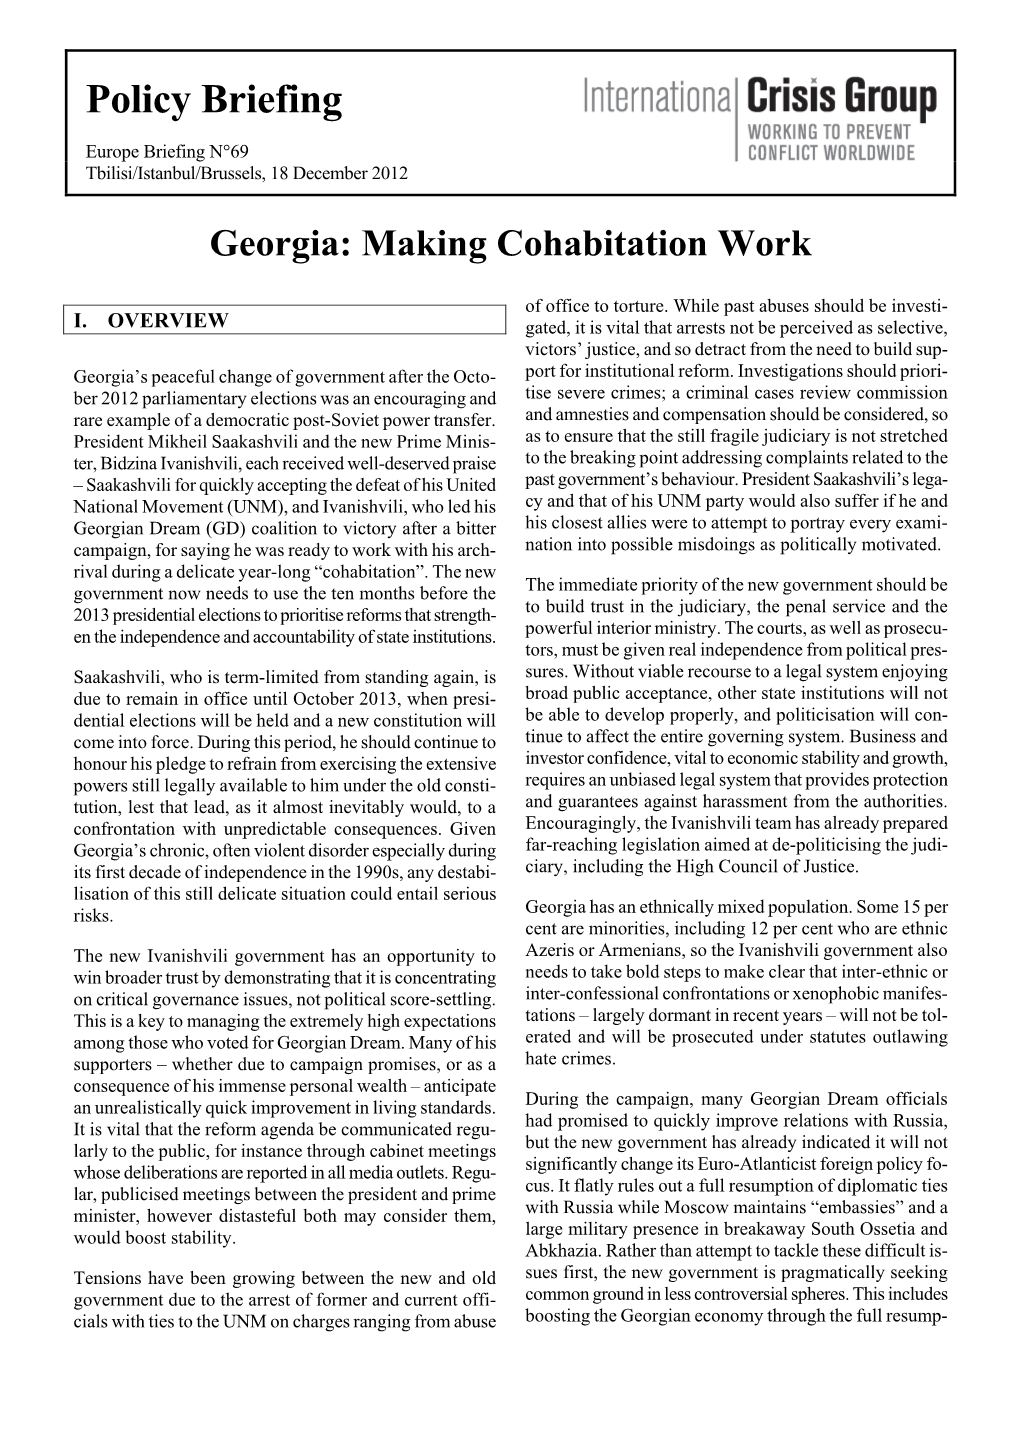 Georgia: Making Cohabitation Work